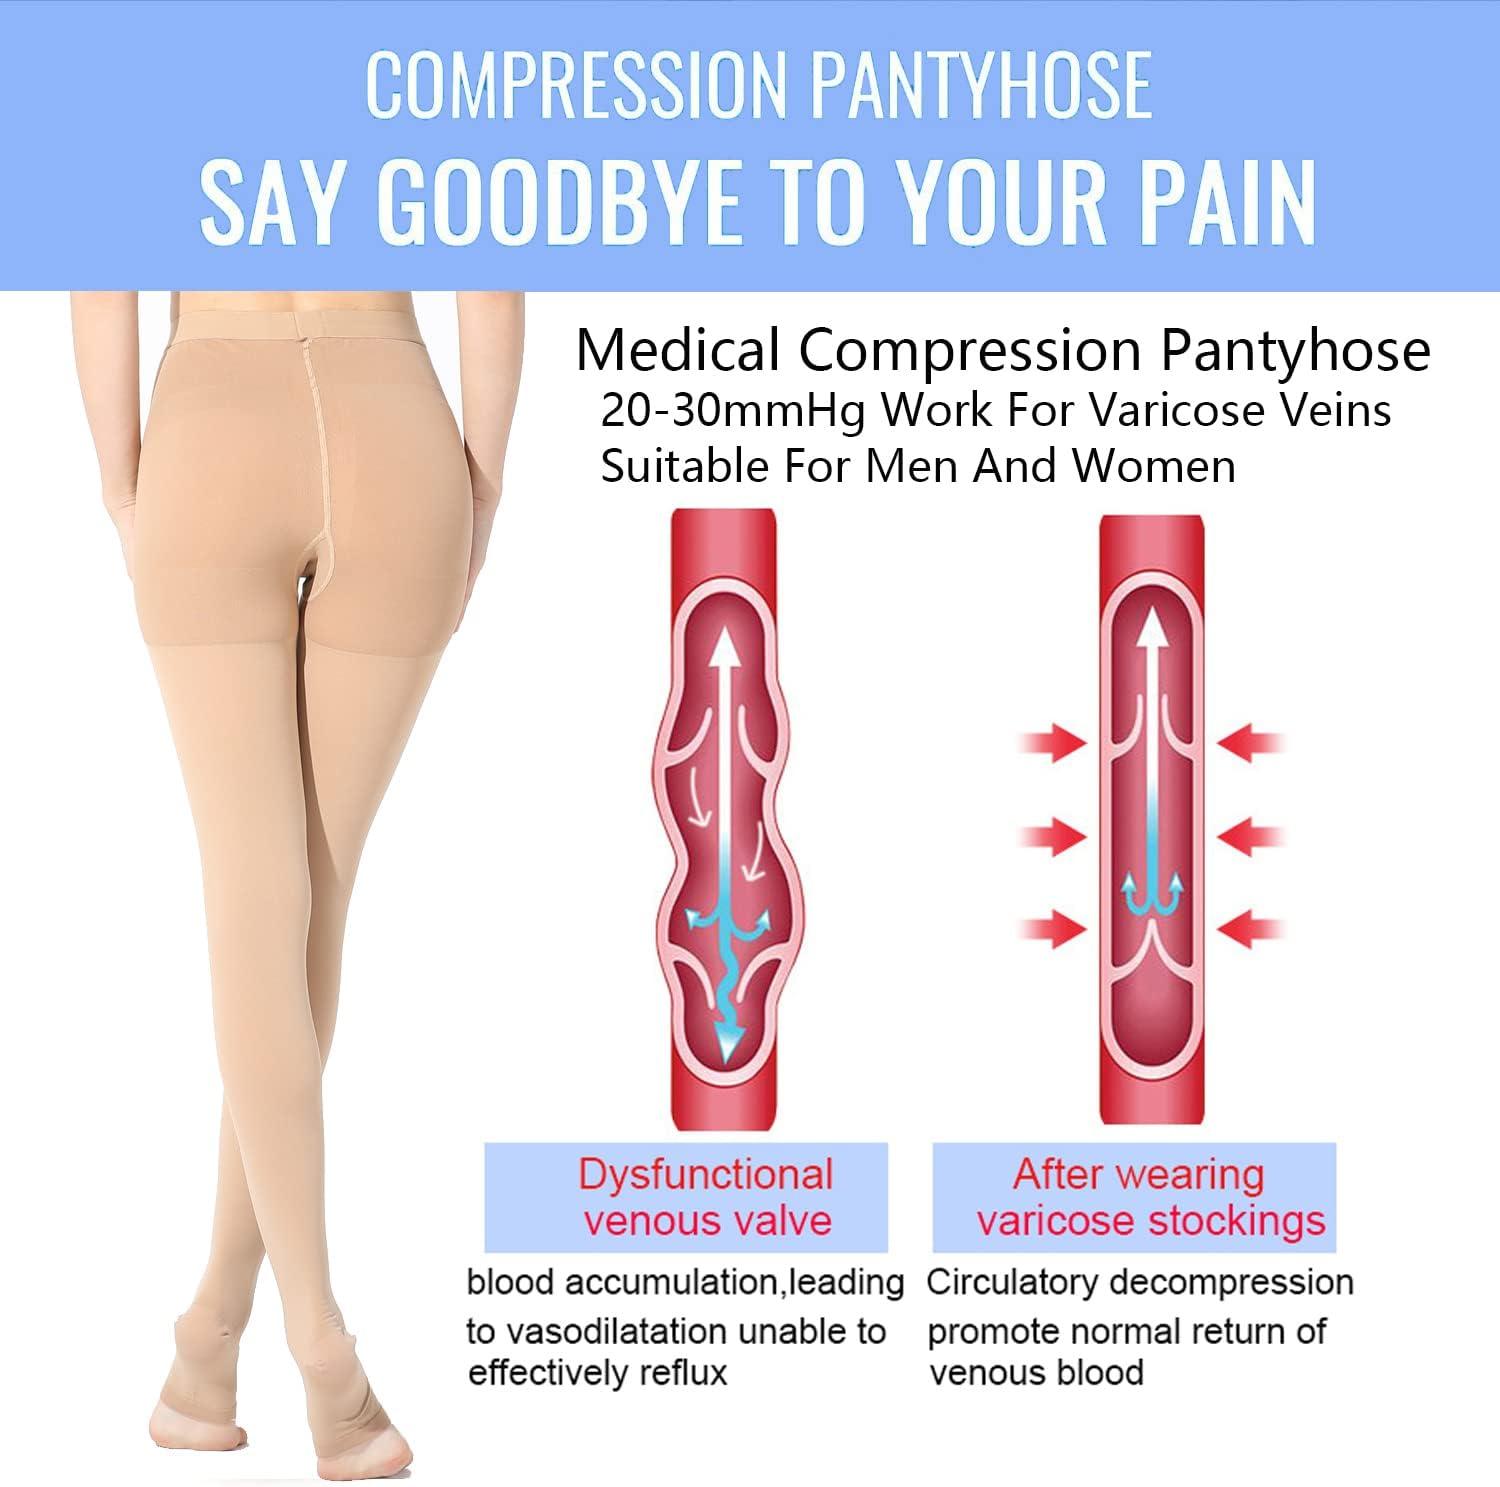 GLEMOSSLY Medical Compression Pantyhose for Women & Men,Open Toe